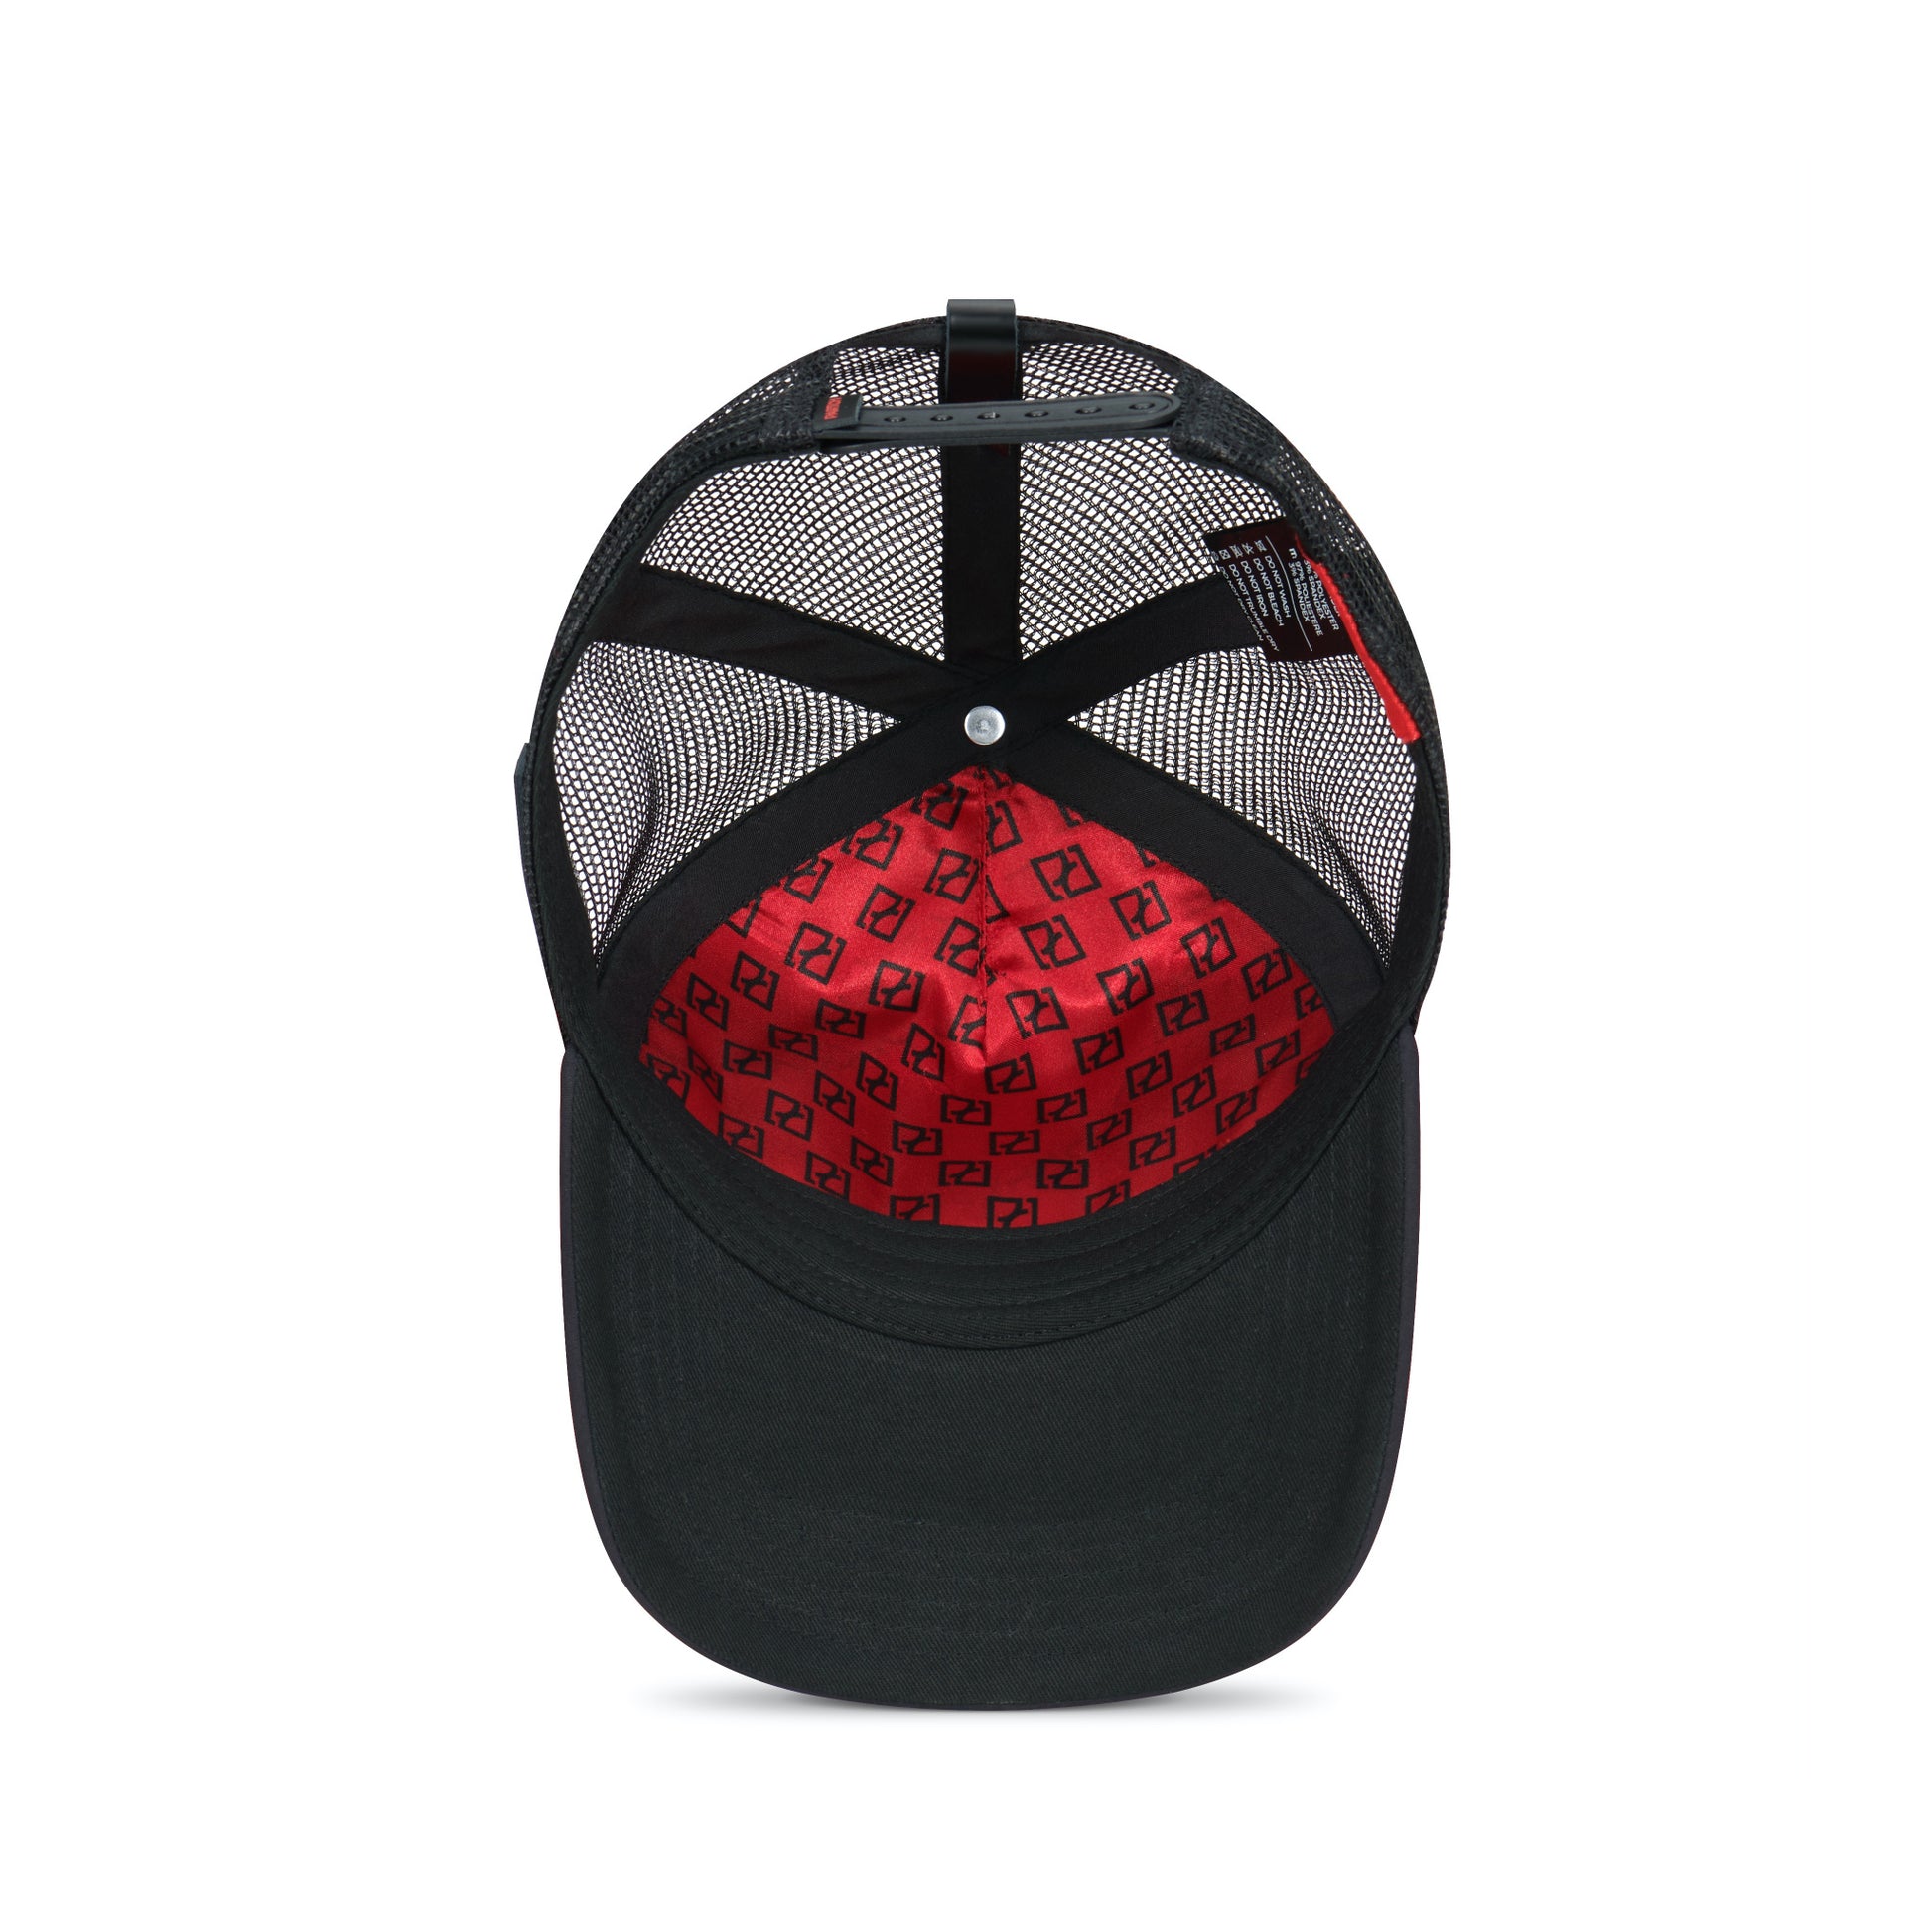 Partch Trucker hat black with Art Inside hat Panel